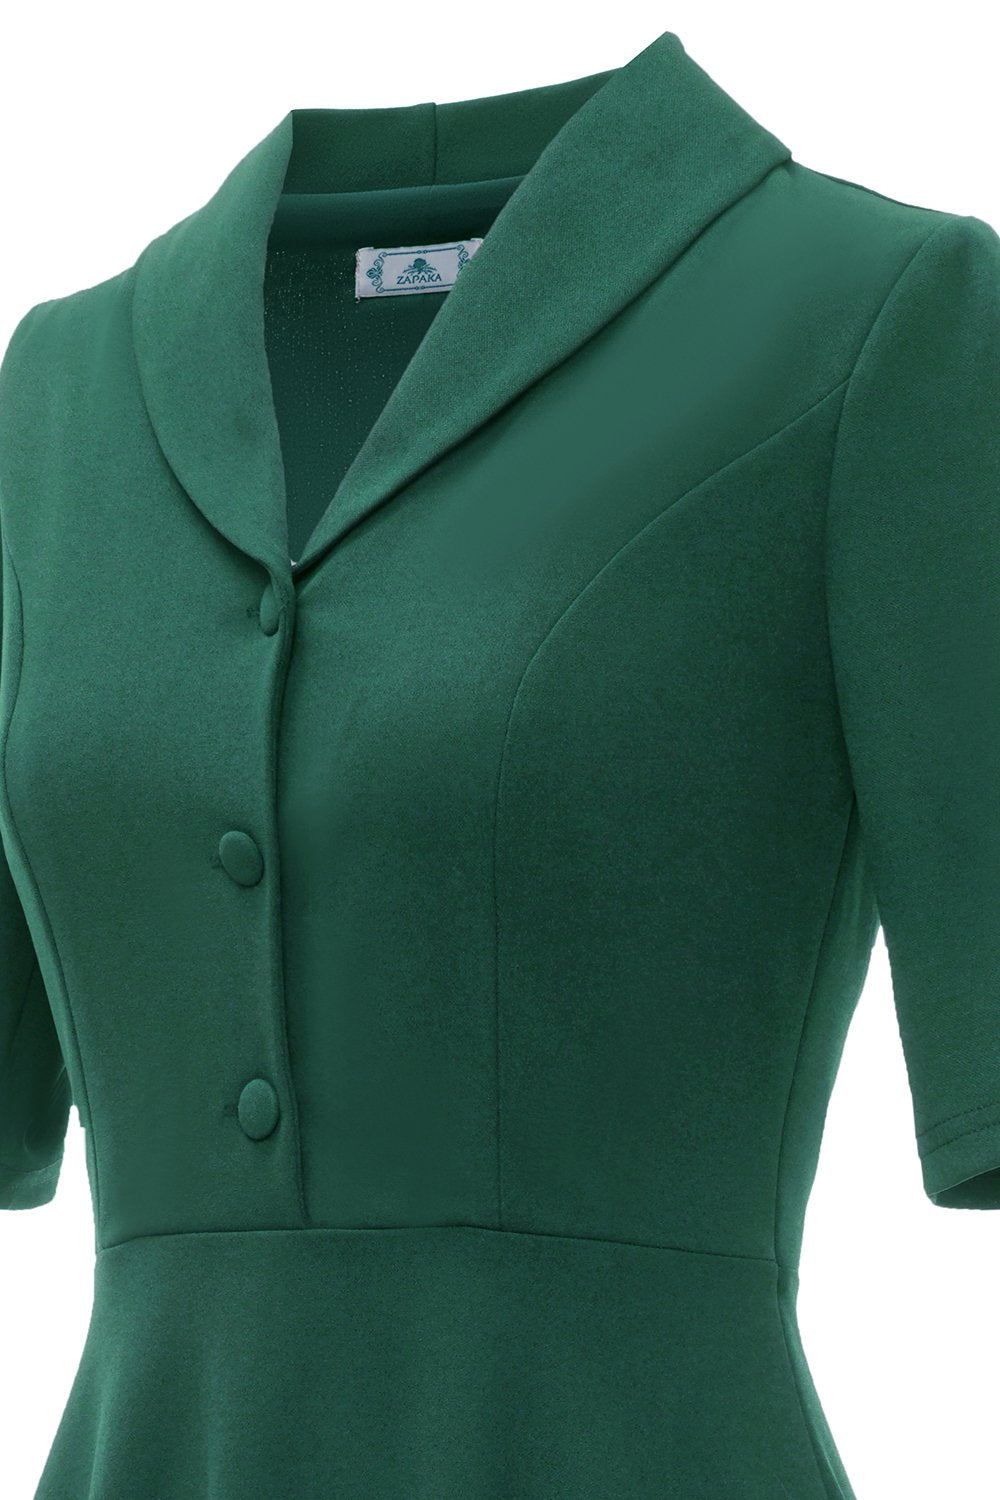 Dark Green Short Sleeves Vintage 1950s Dress